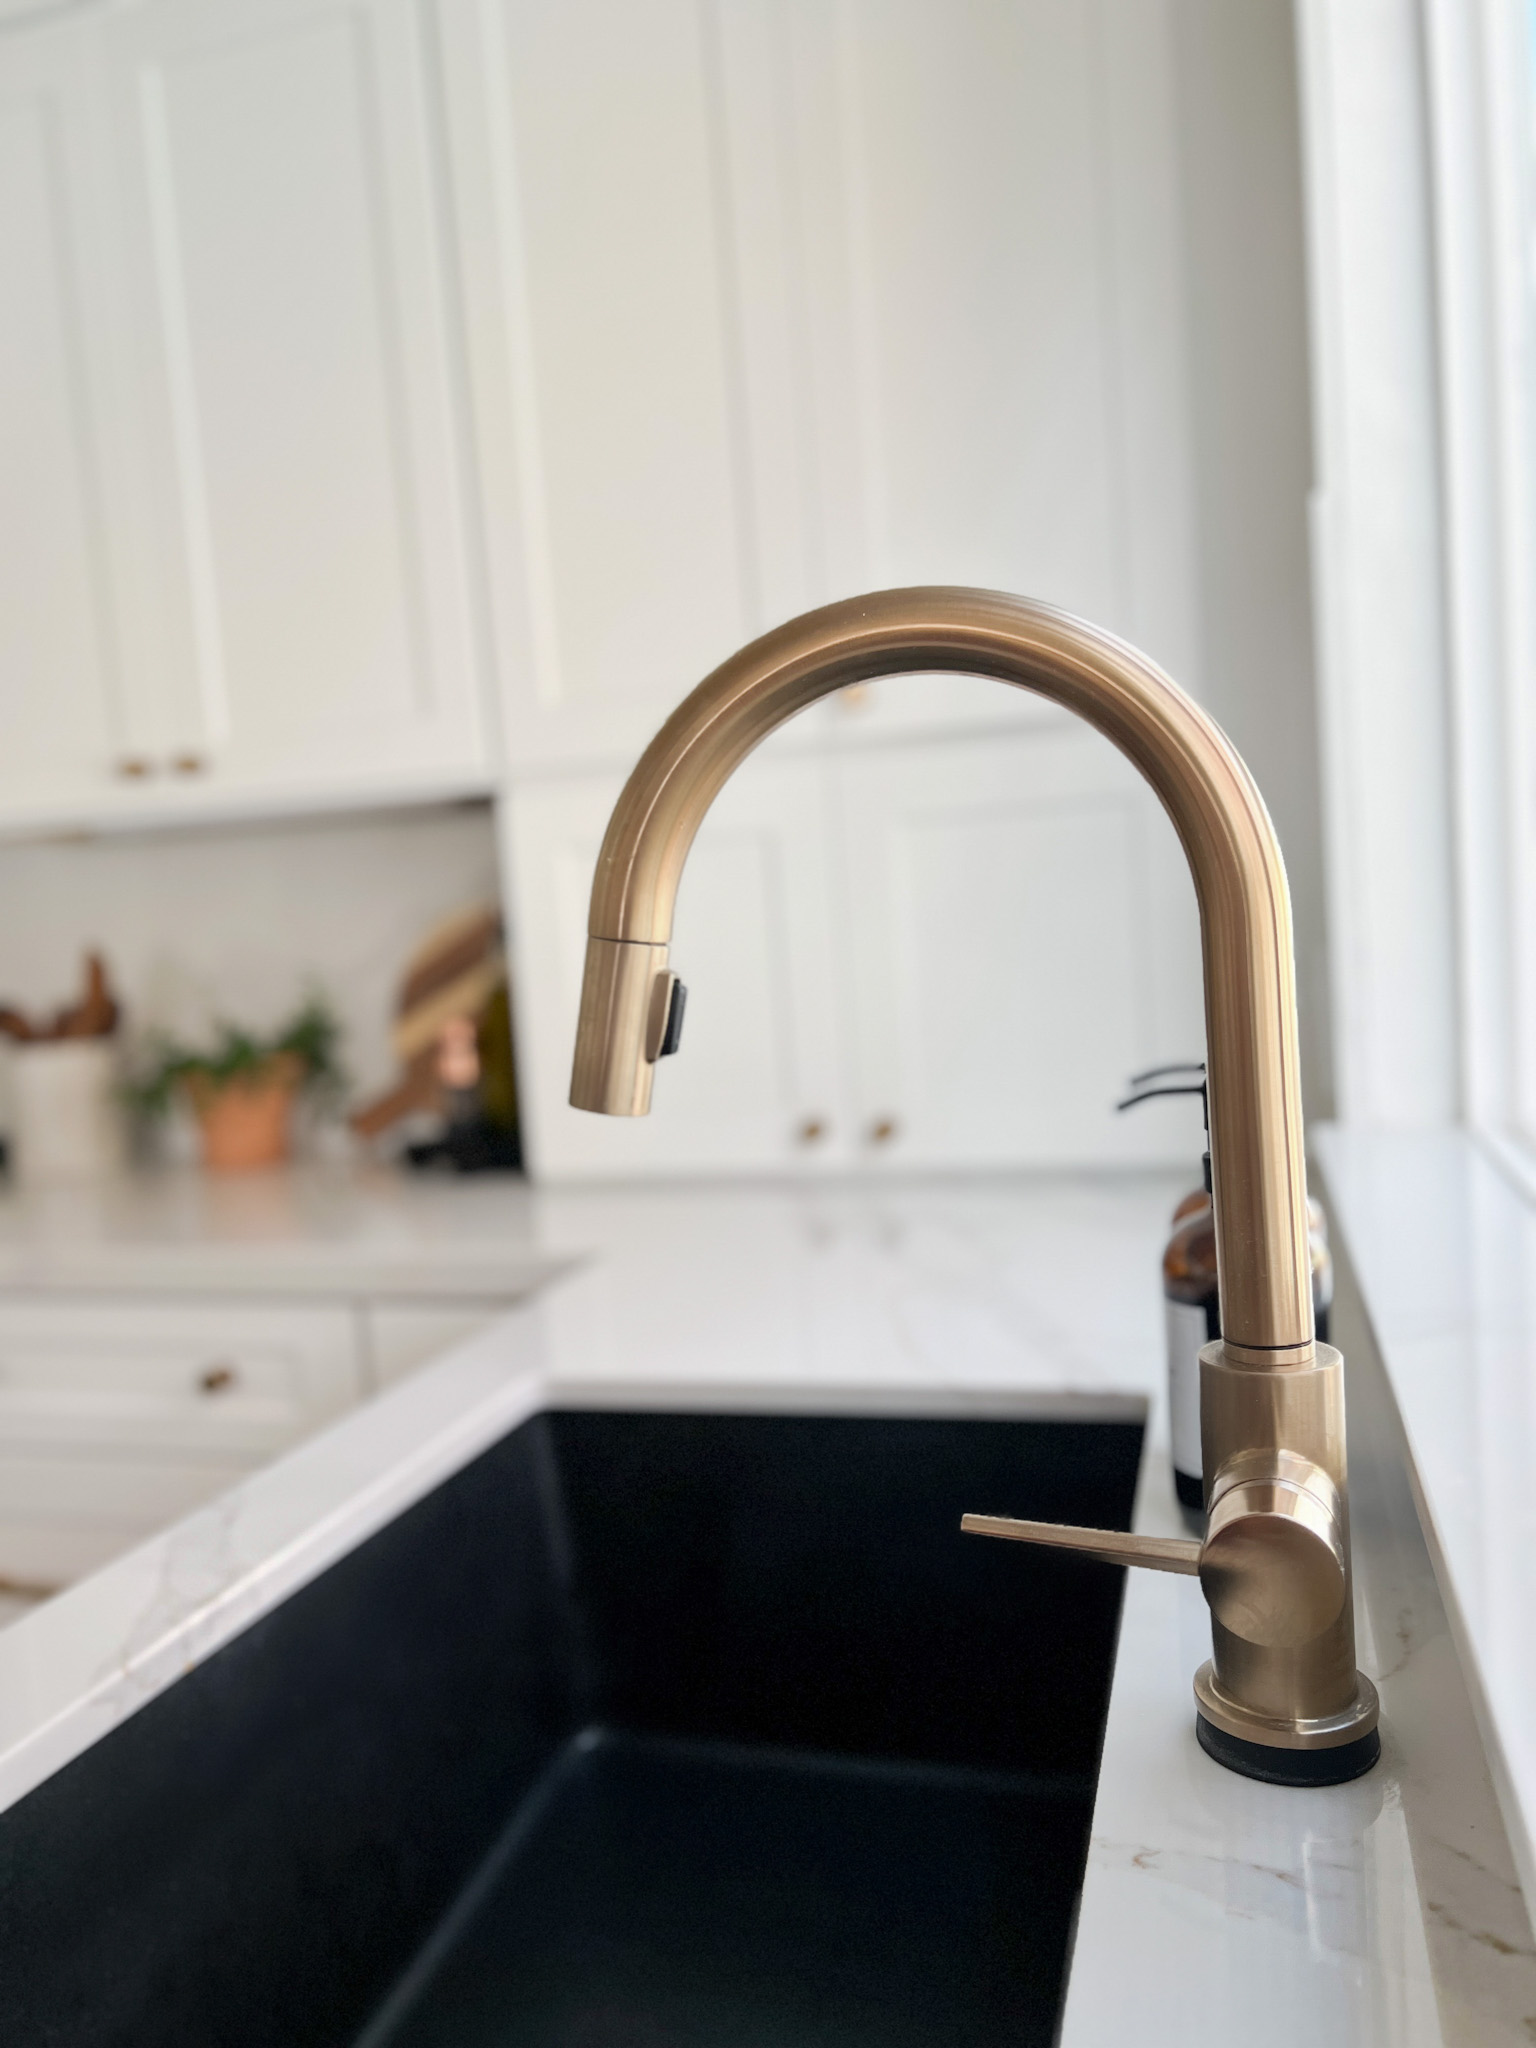 gold kitchen faucet
bronze kitchen fixtures